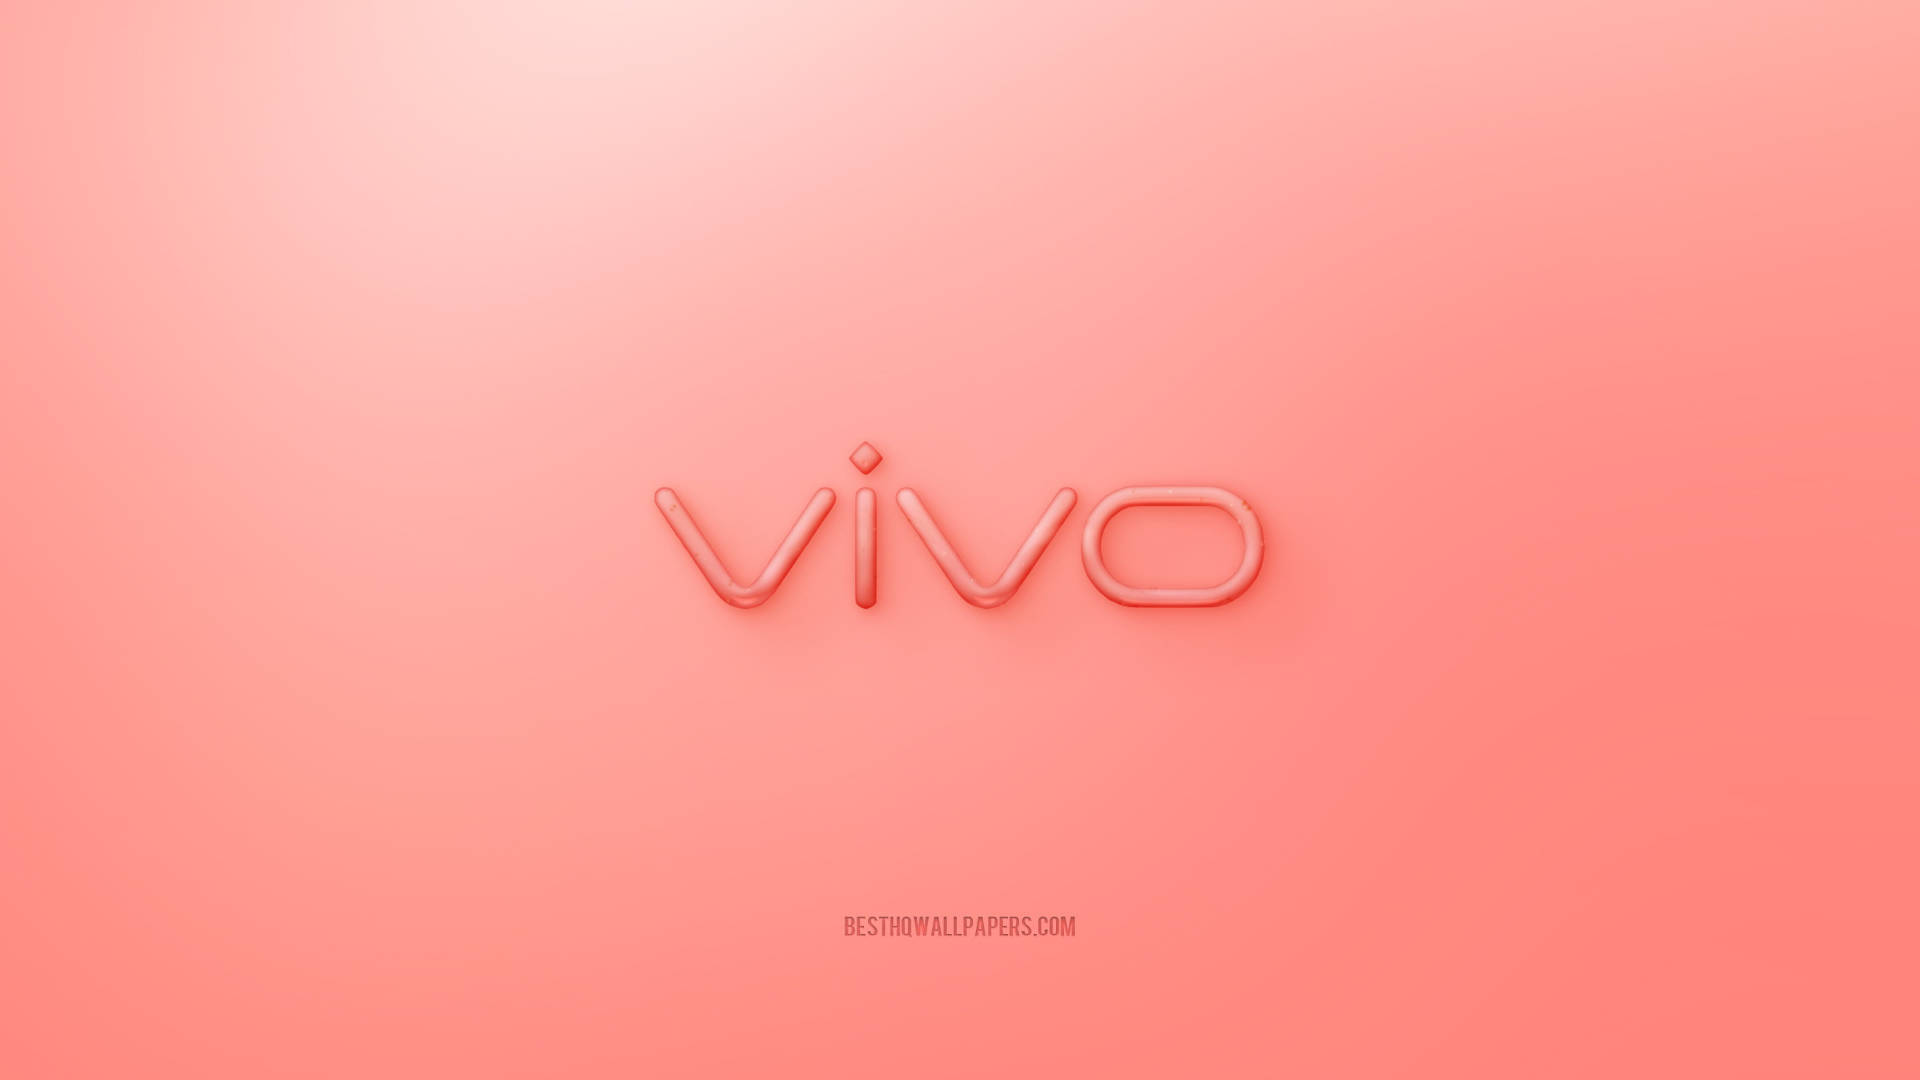 Peachvivo-logo Wallpaper